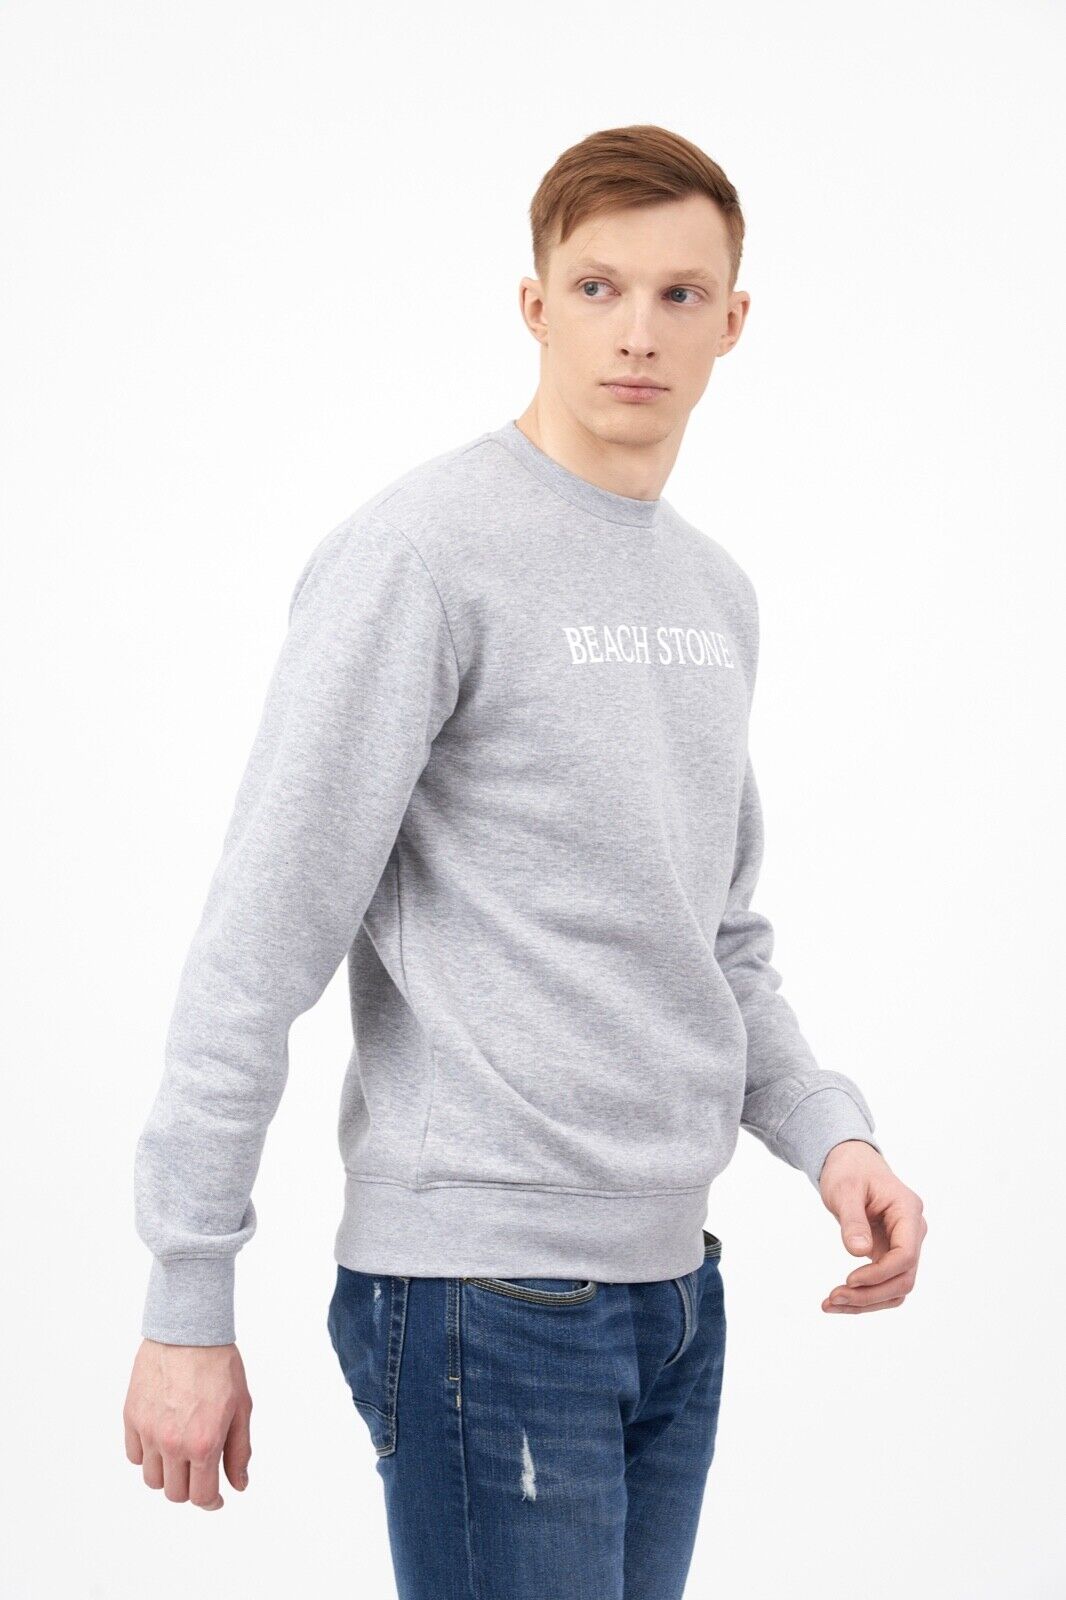 Crew Neck Men's Sweatshirt with Beach Stone Print in Grey